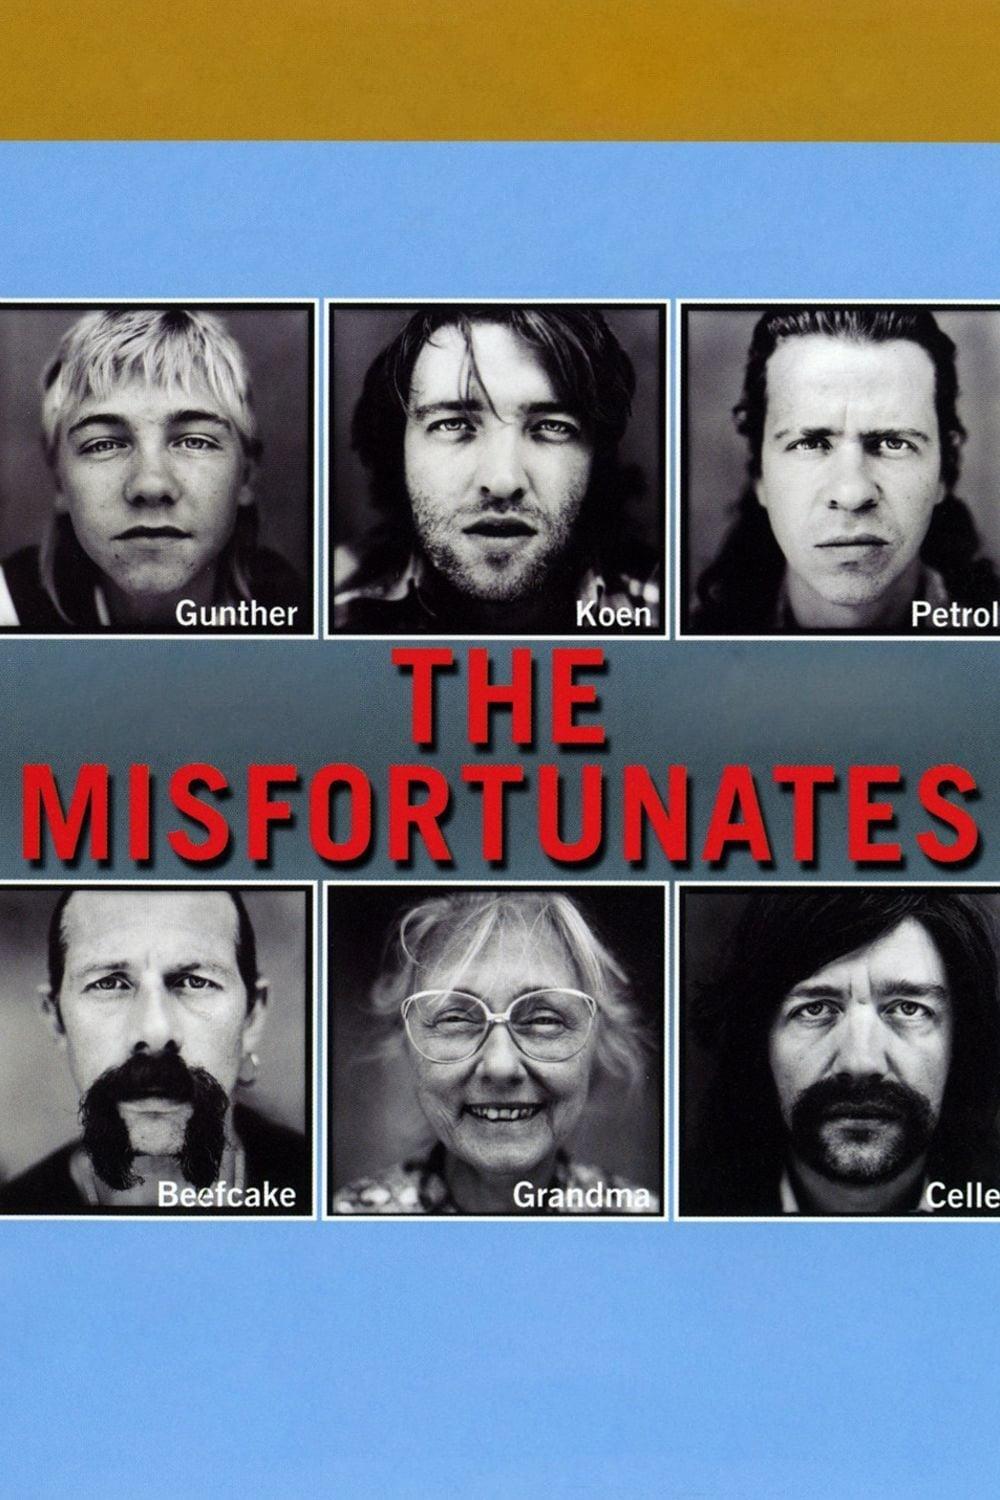 The Misfortunates poster